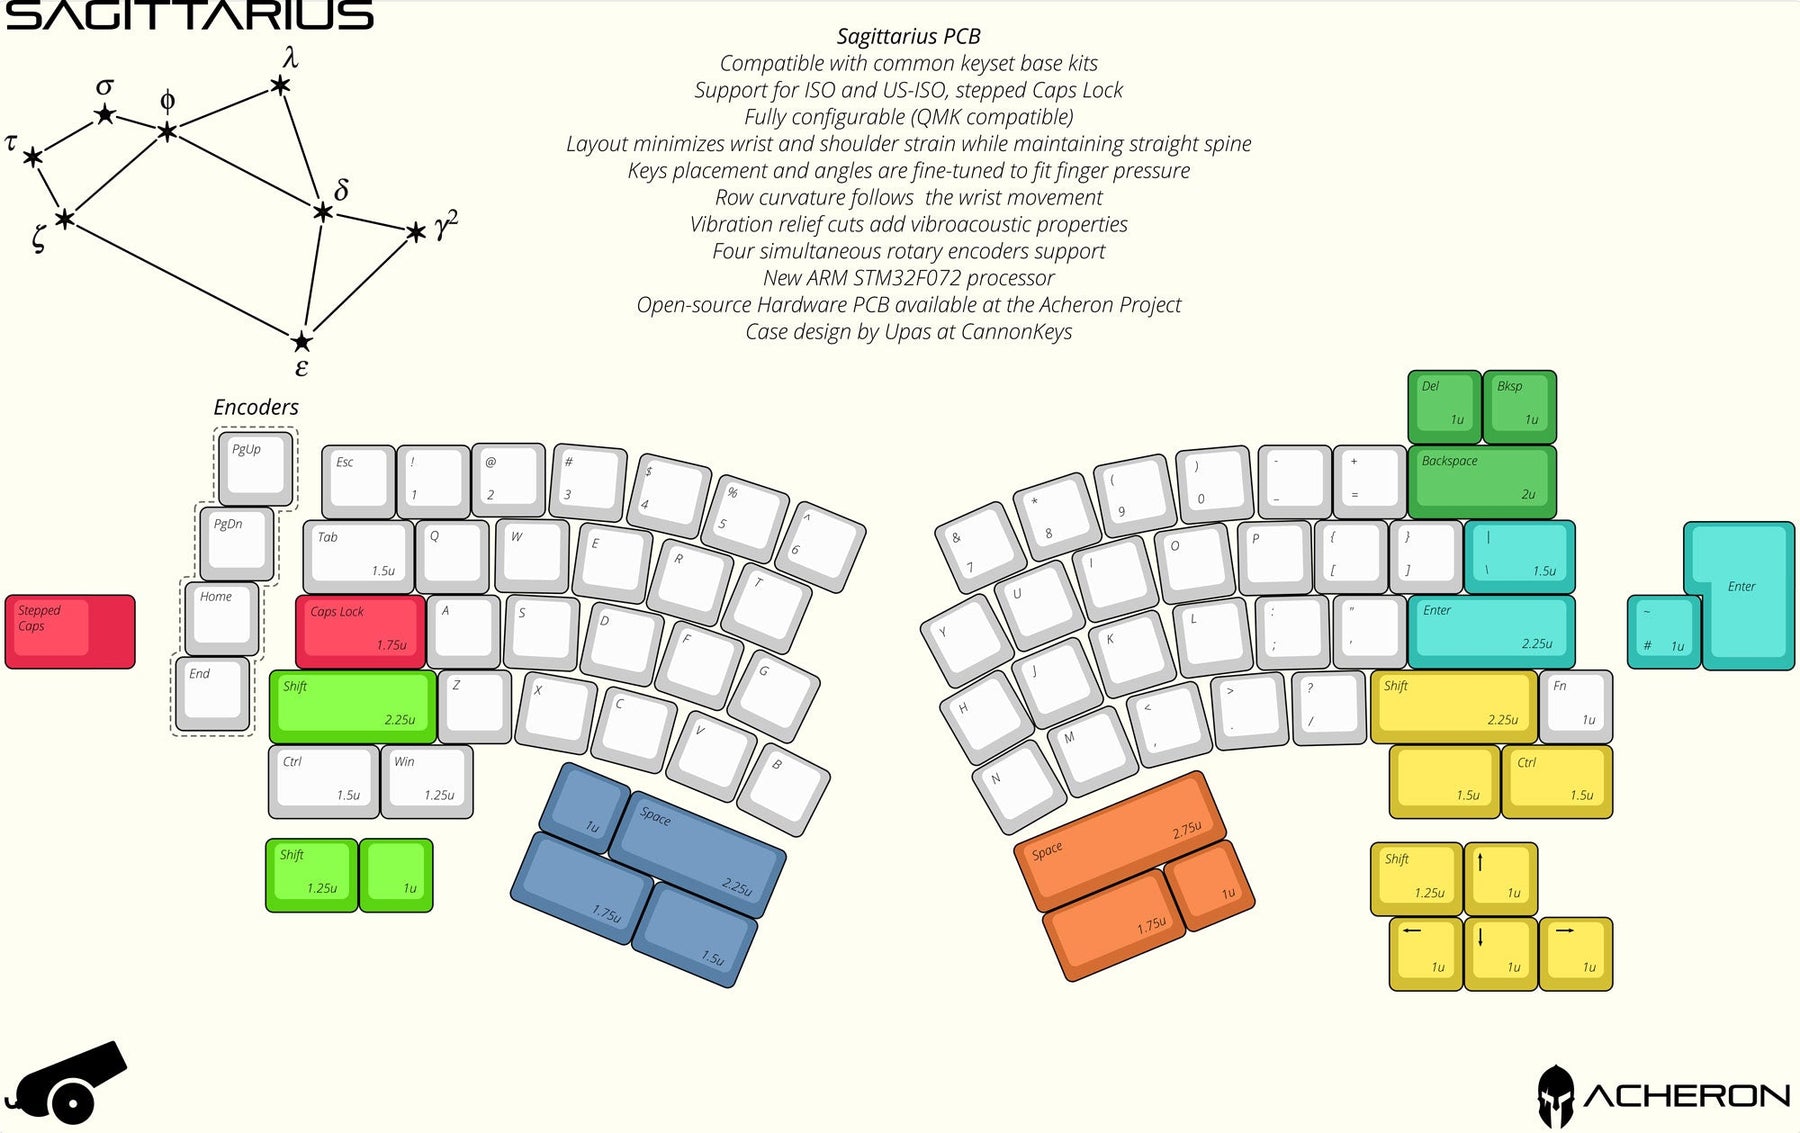 Sagittarius Keyboard Kit - B STOCK